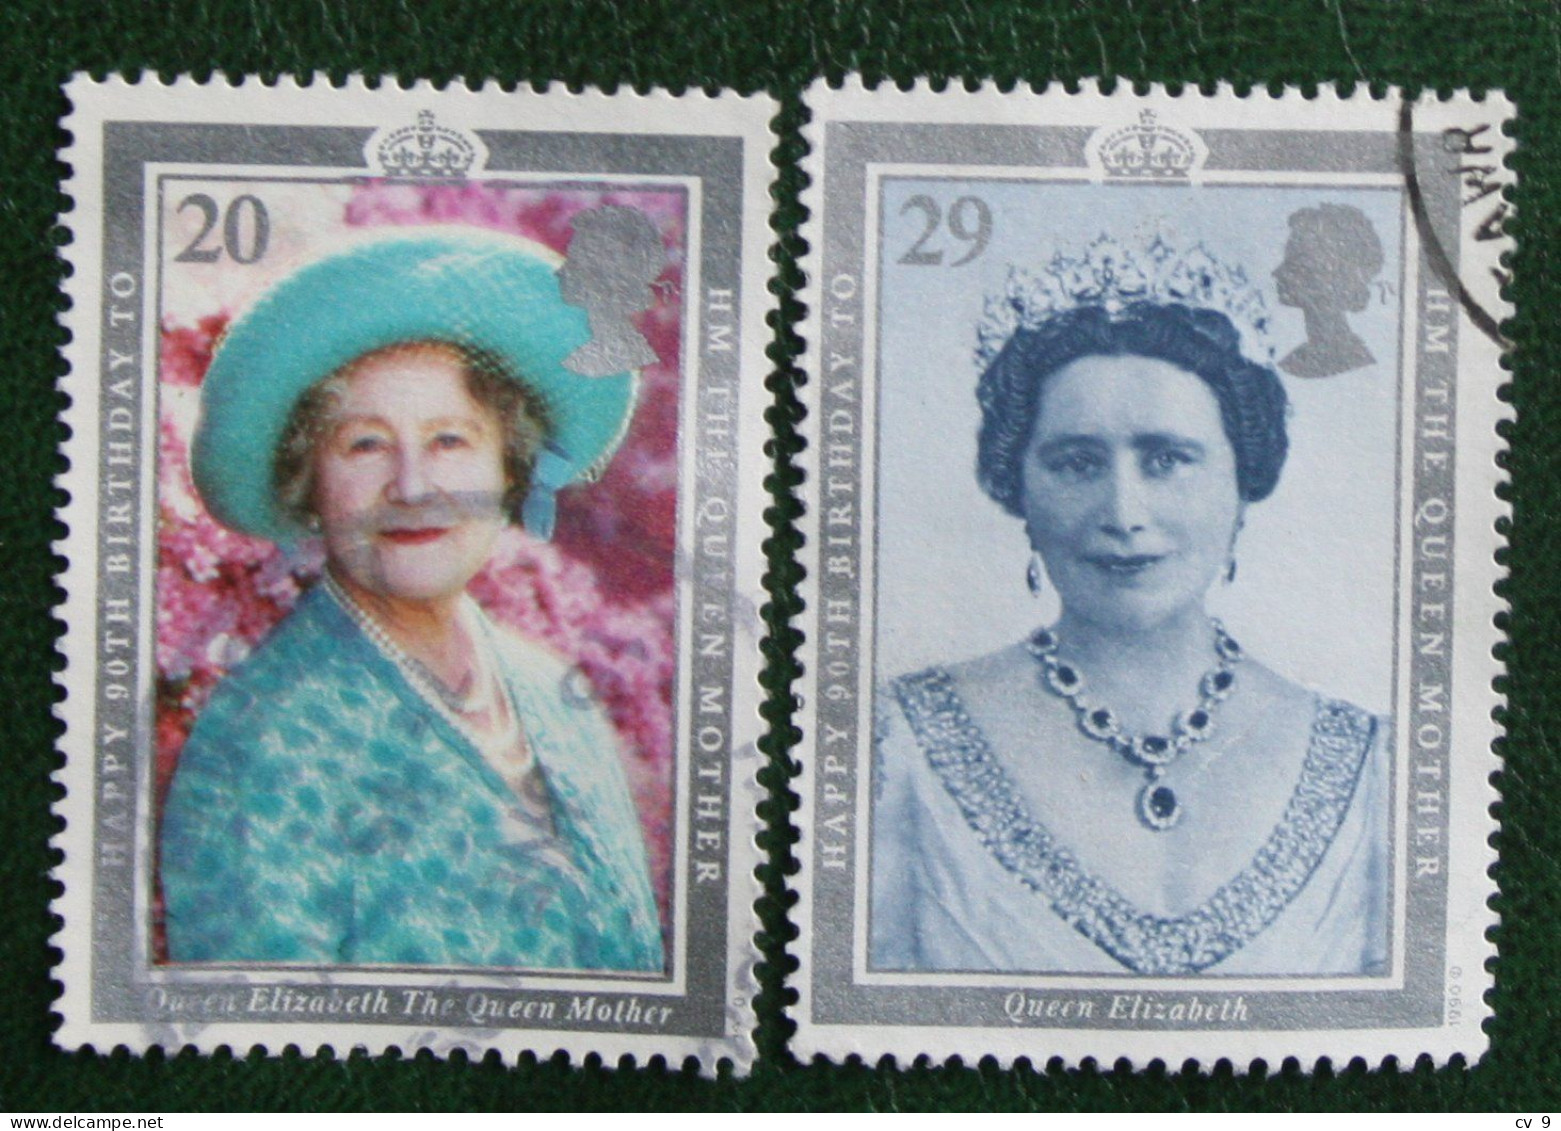 90th Birthday Of The Queen Mother (Mi 1275-1276) 1990 Used Gebruikt Oblitere ENGLAND GRANDE-BRETAGNE GB GREAT BRITAIN - Gebraucht